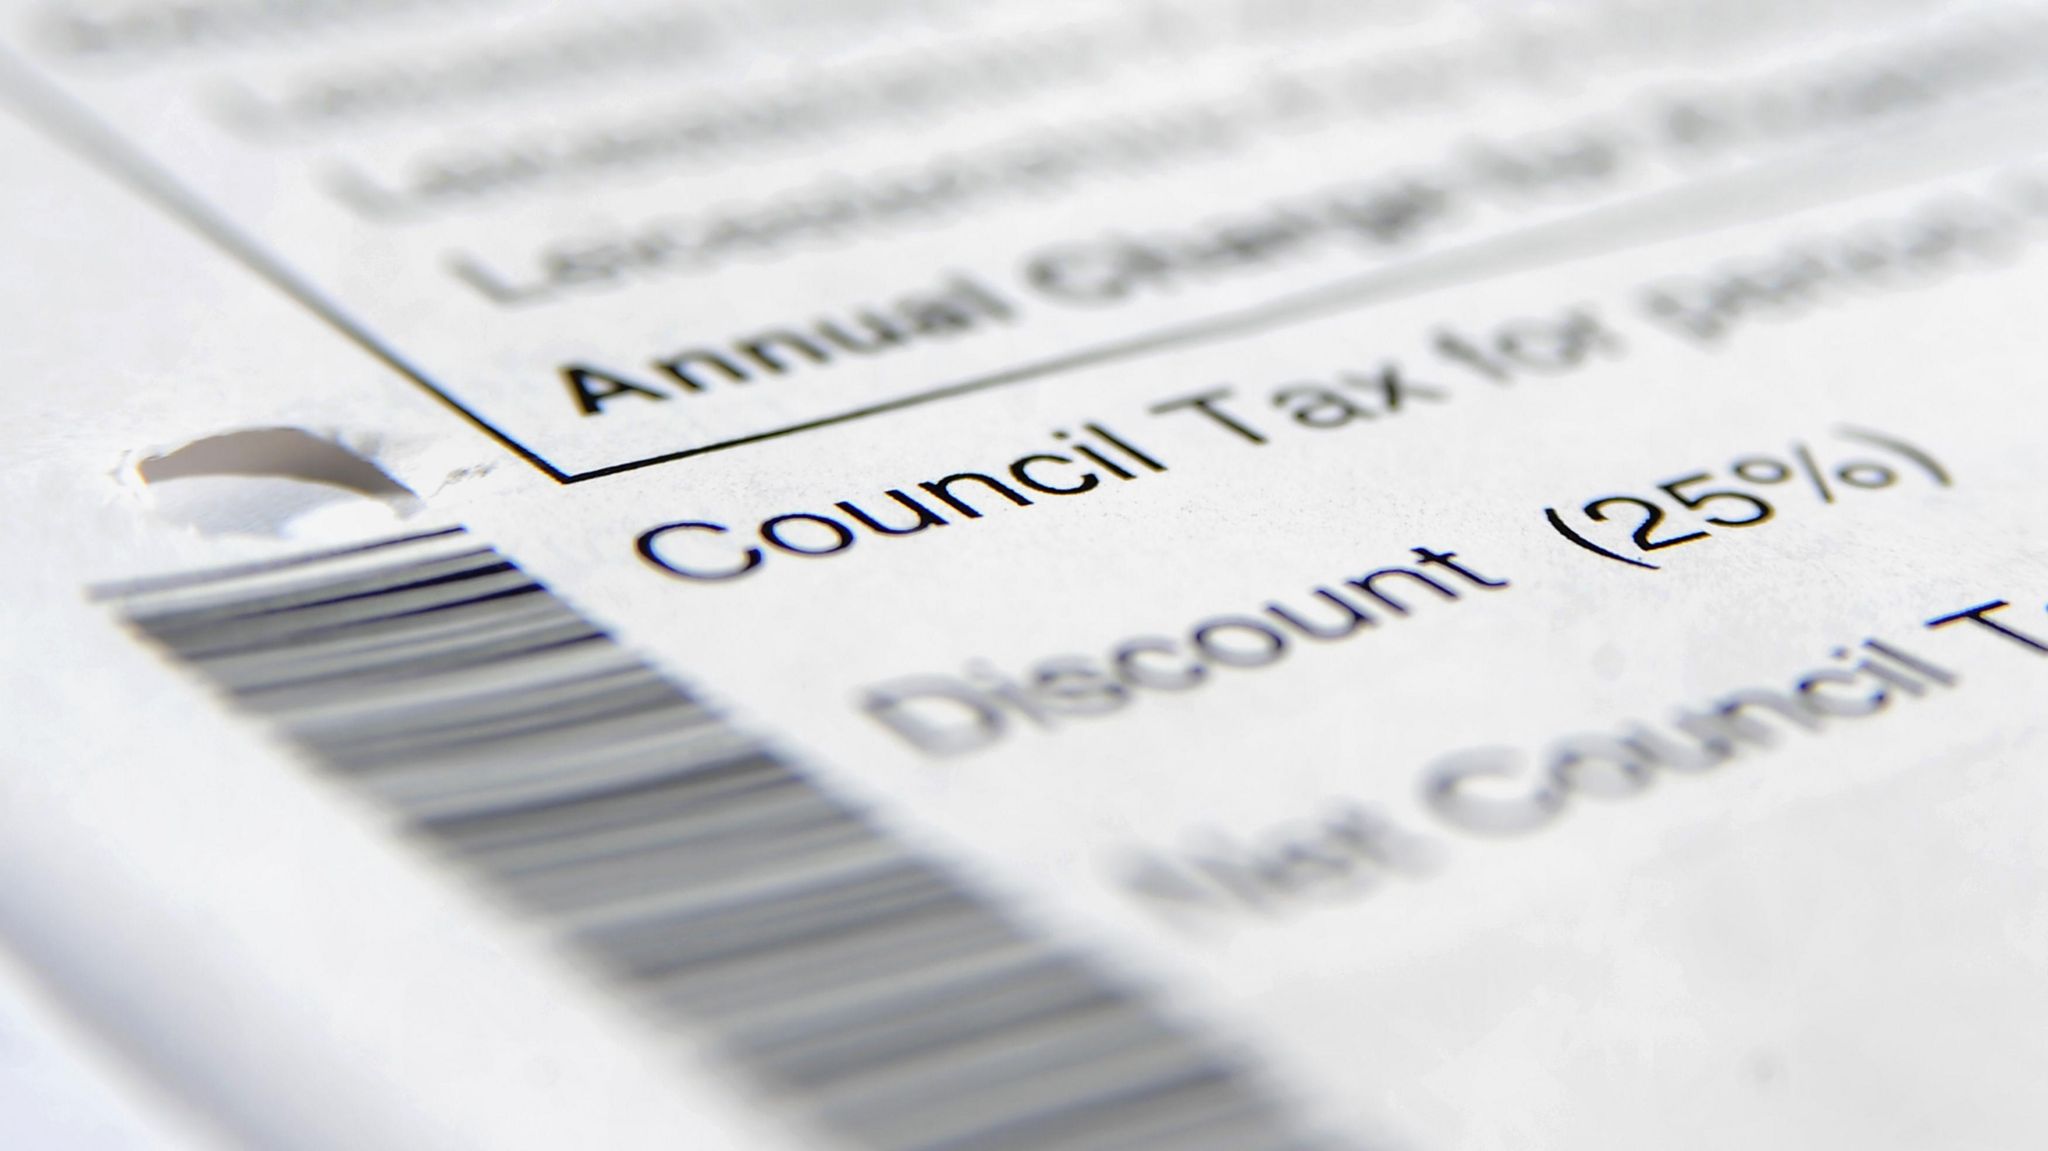 Council tax letter